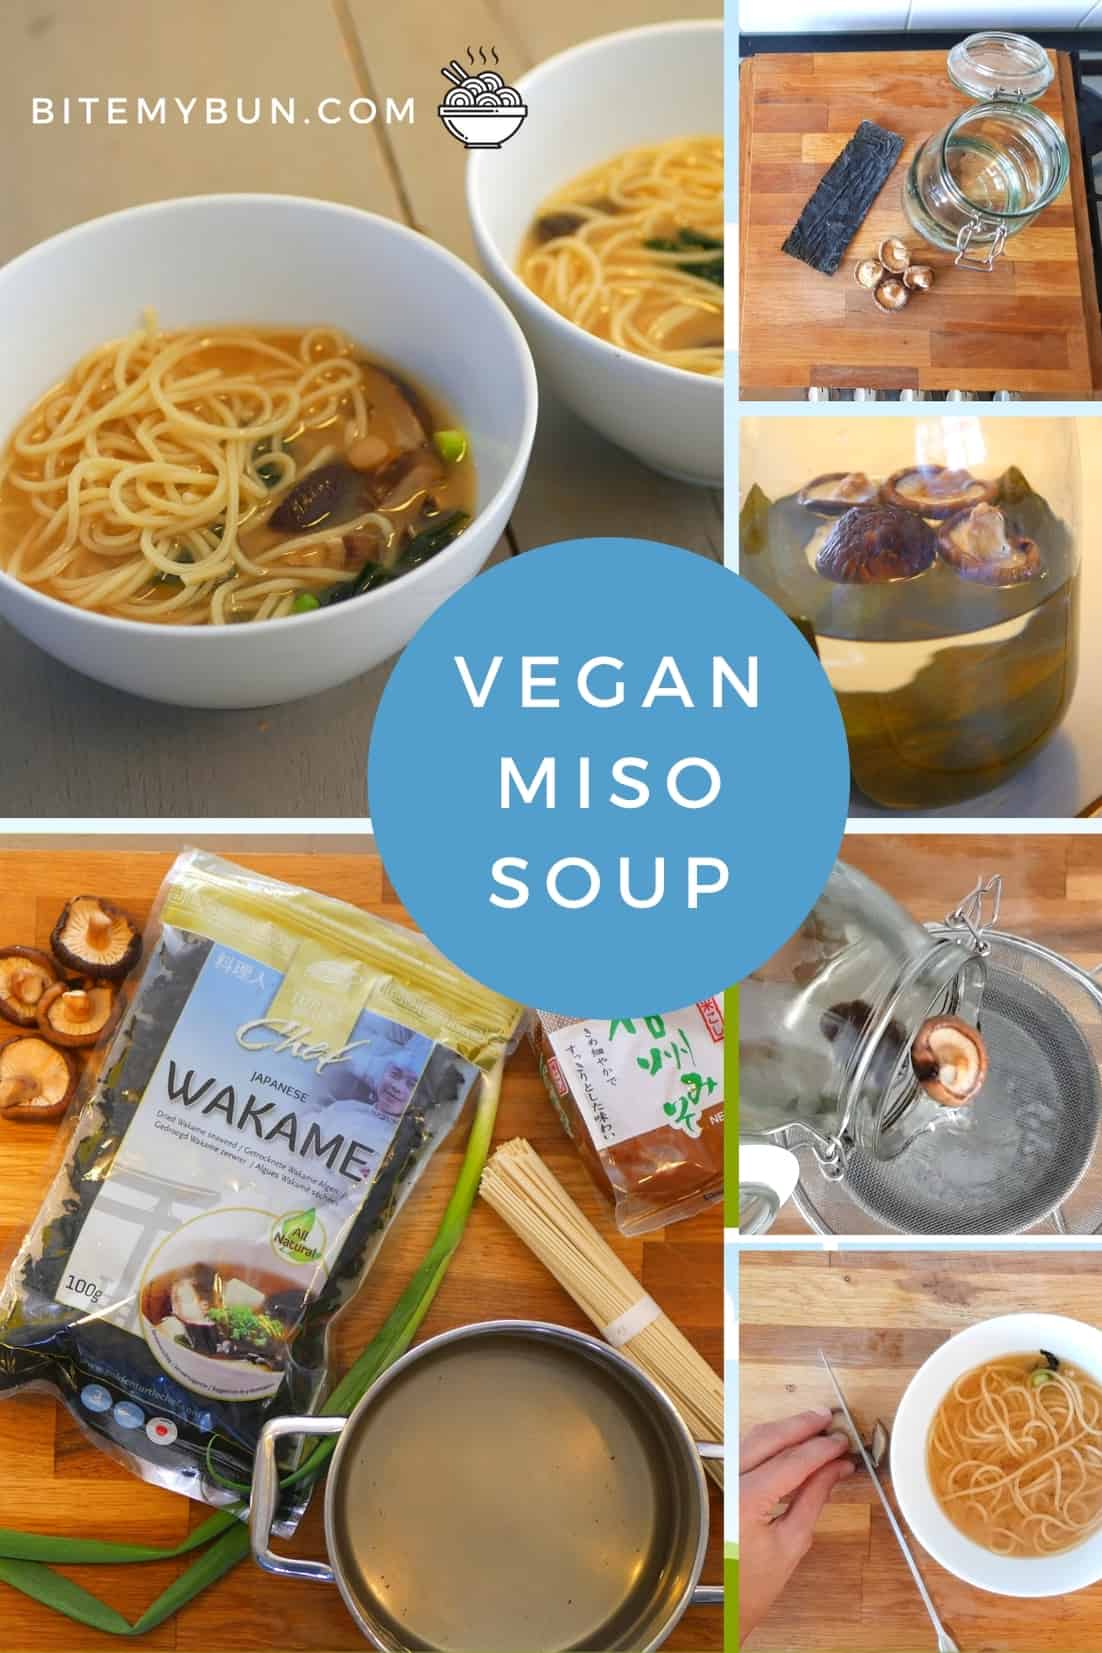 Receita de sopa de missô vegan